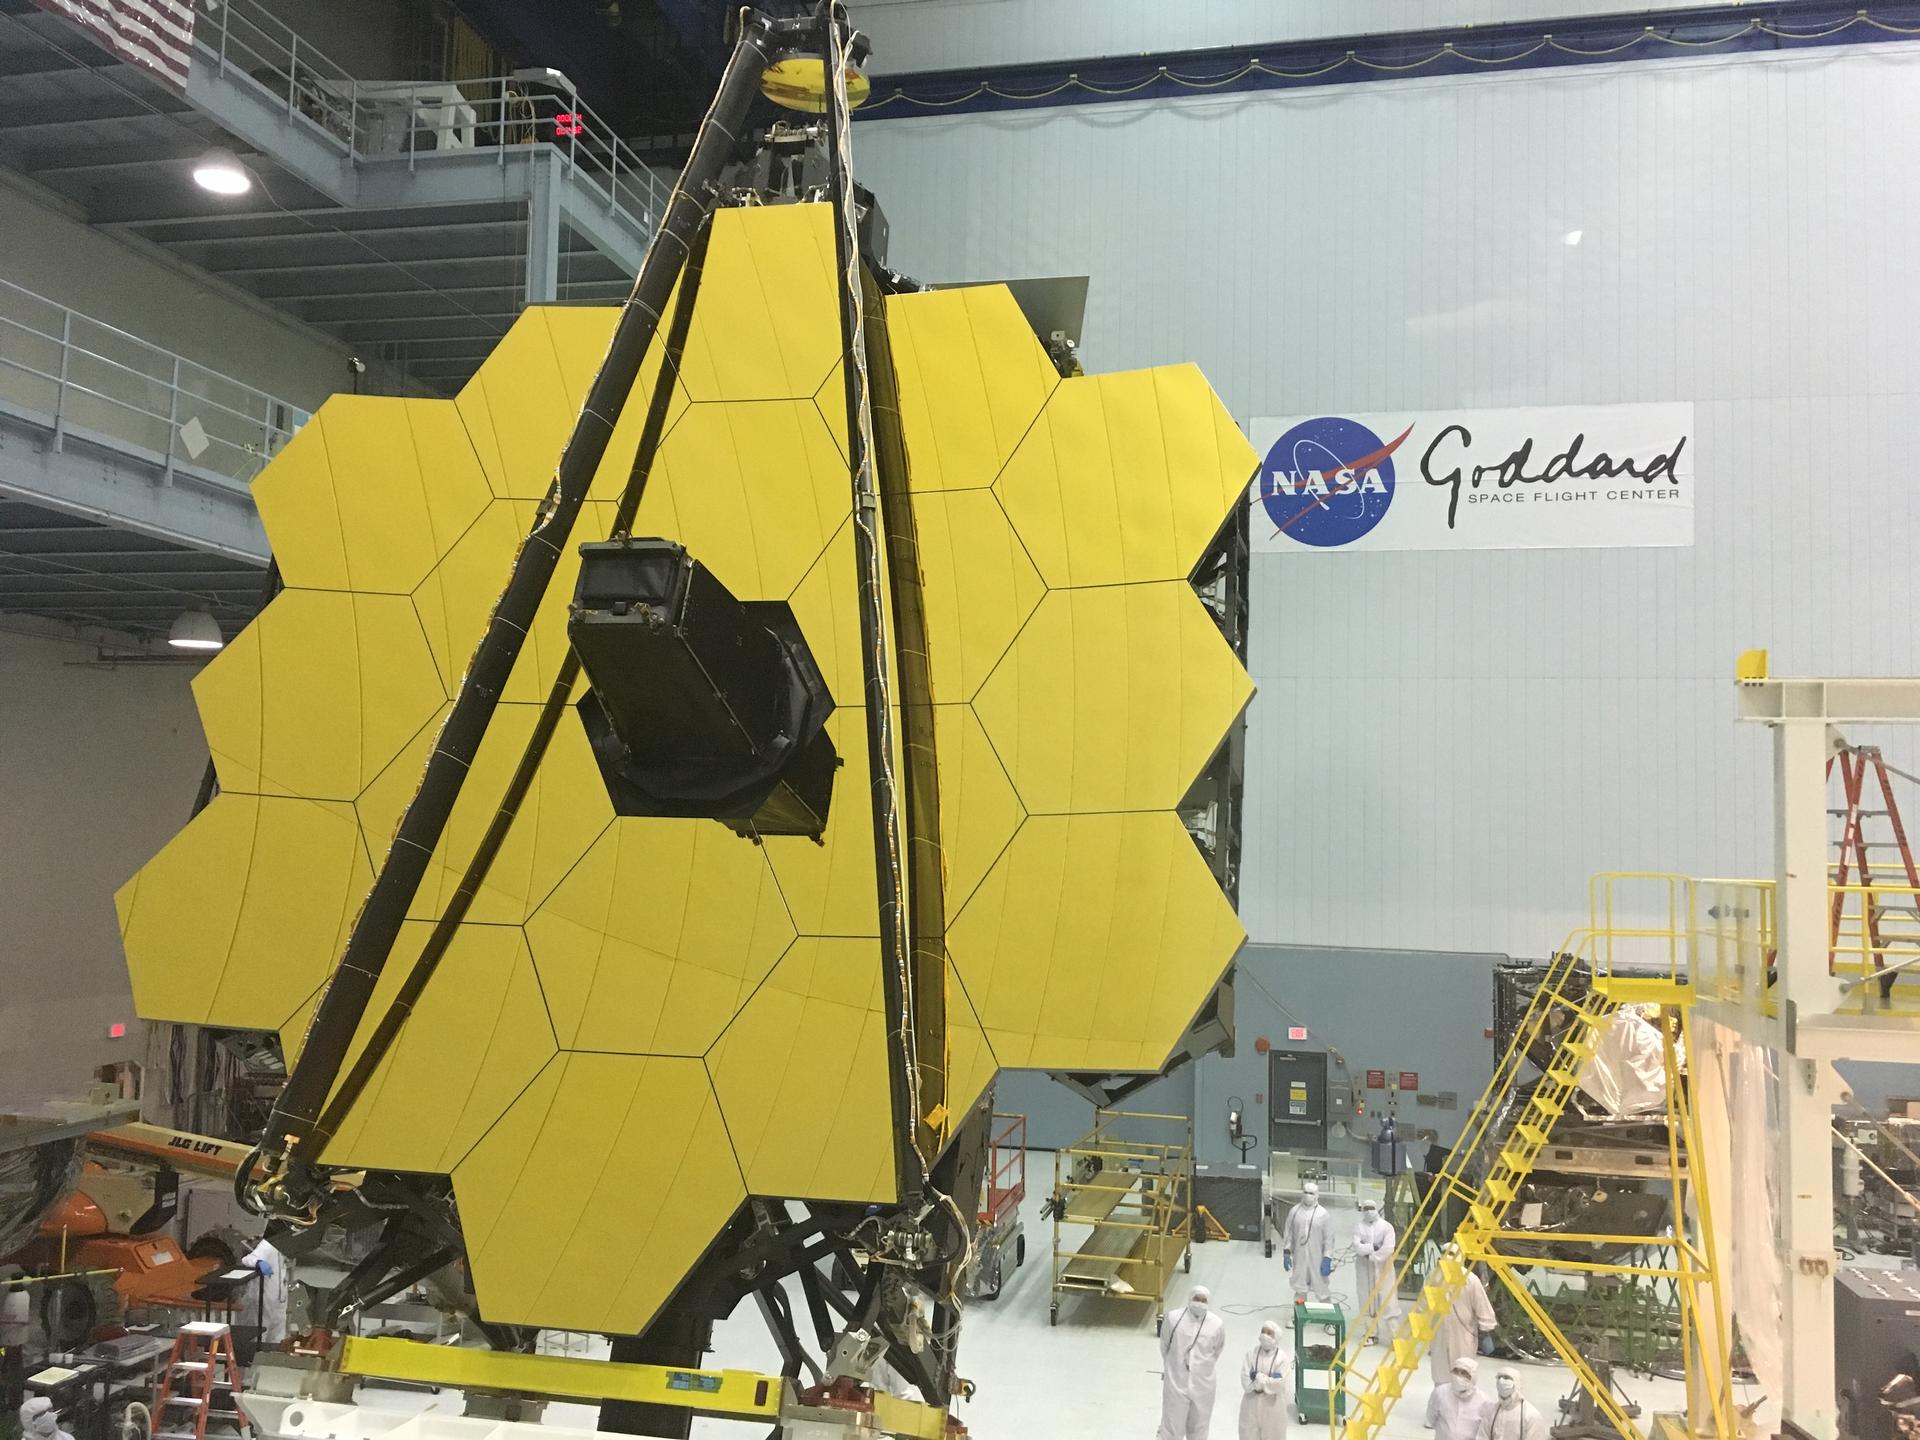 The James Webb Space Telescope primary mirror during development at Nasa Goddard Space Flight Center